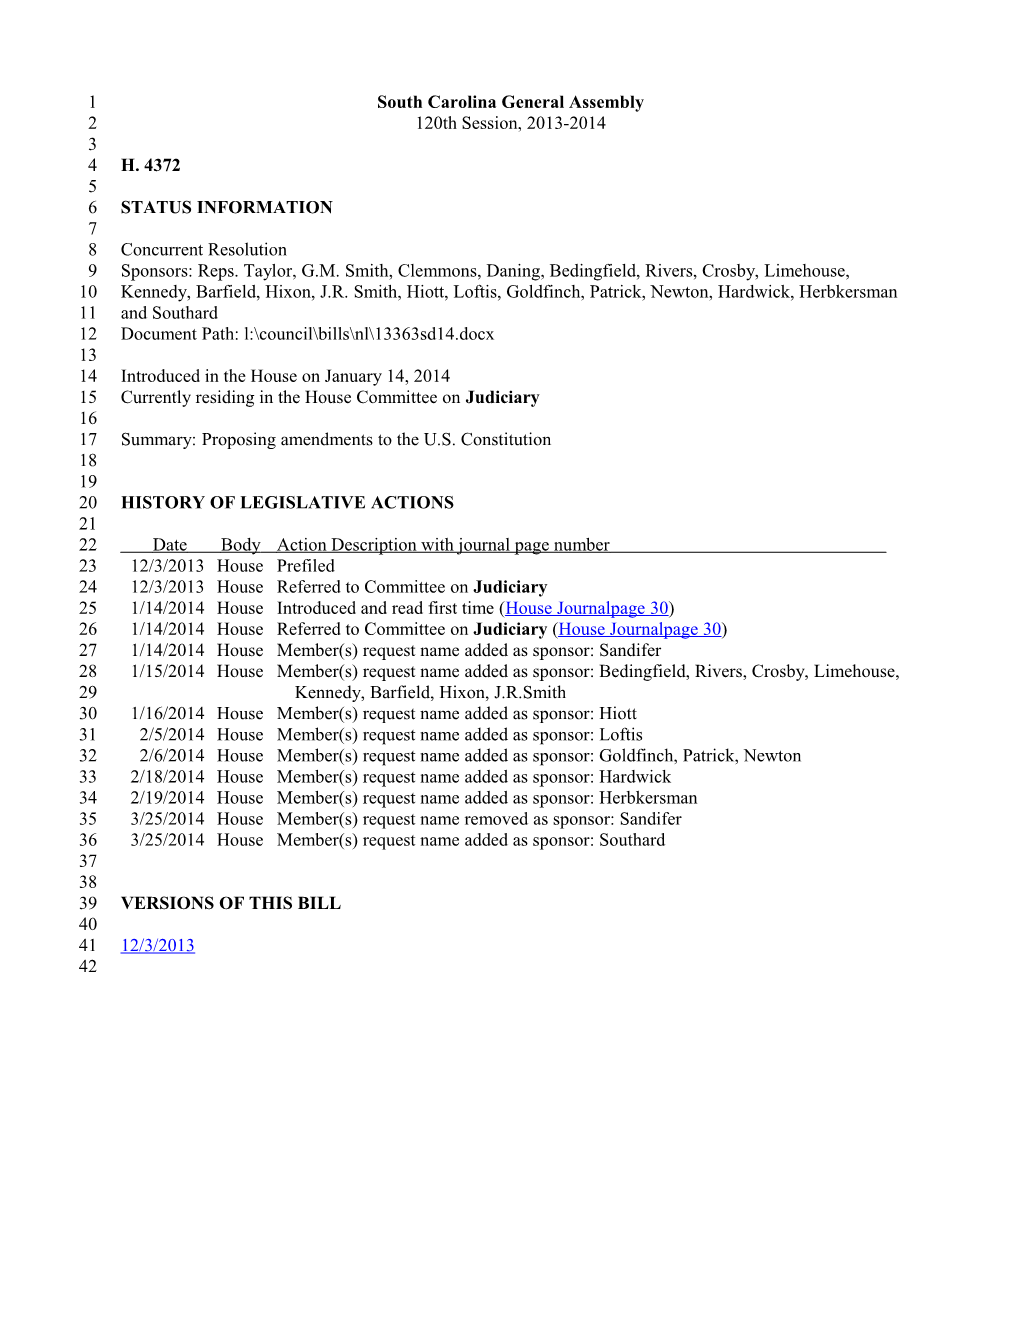 2013-2014 Bill 4372: Proposing Amendments to the U.S. Constitution - South Carolina Legislature